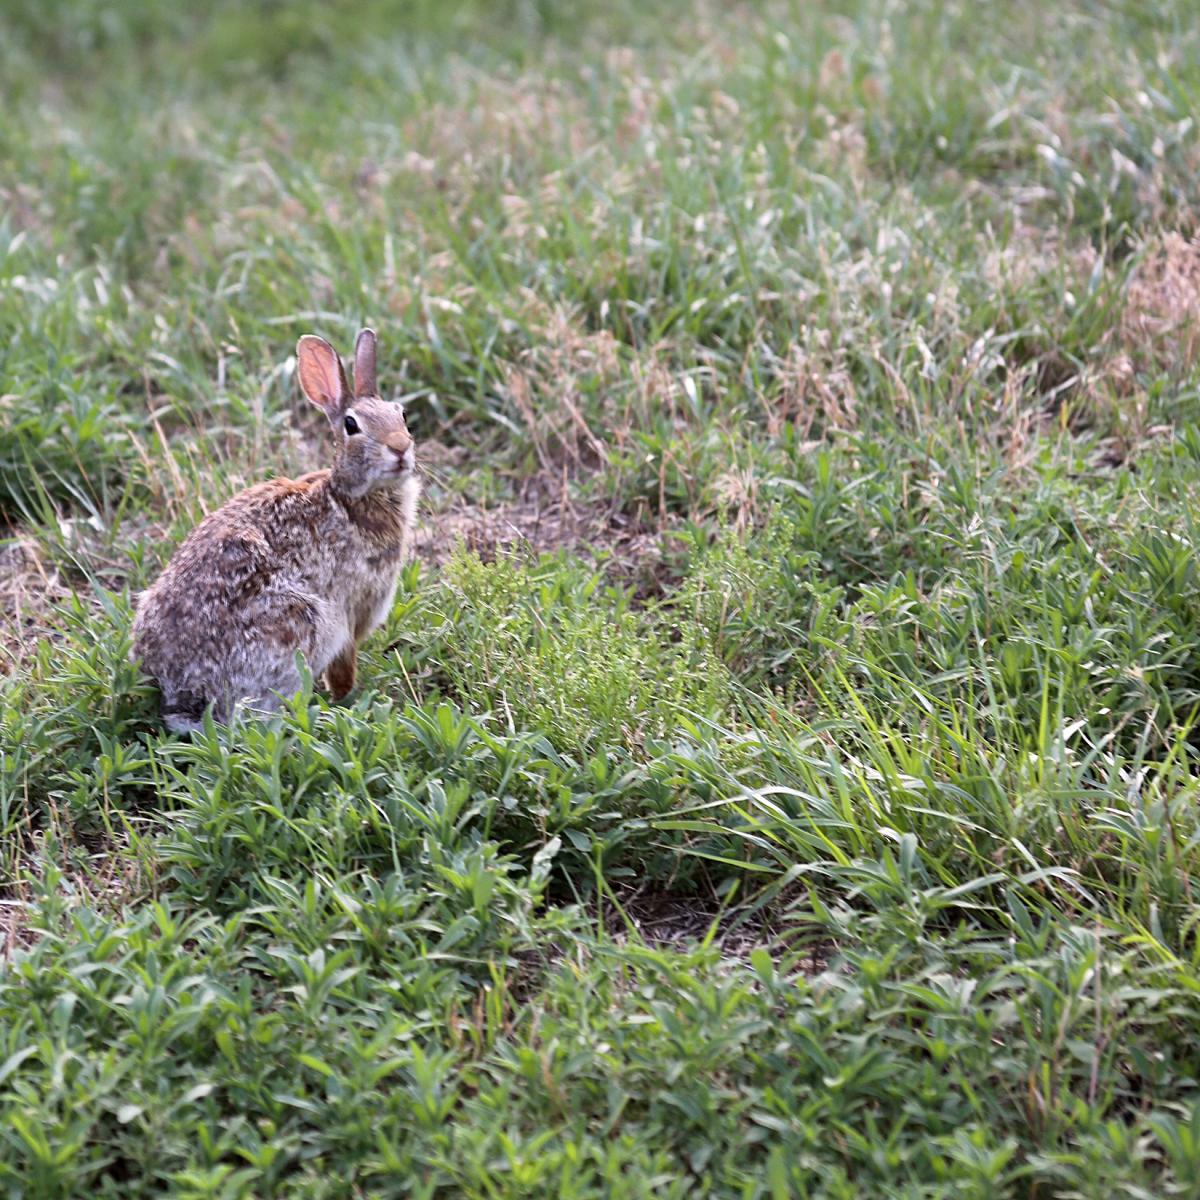 A rabbit in grass